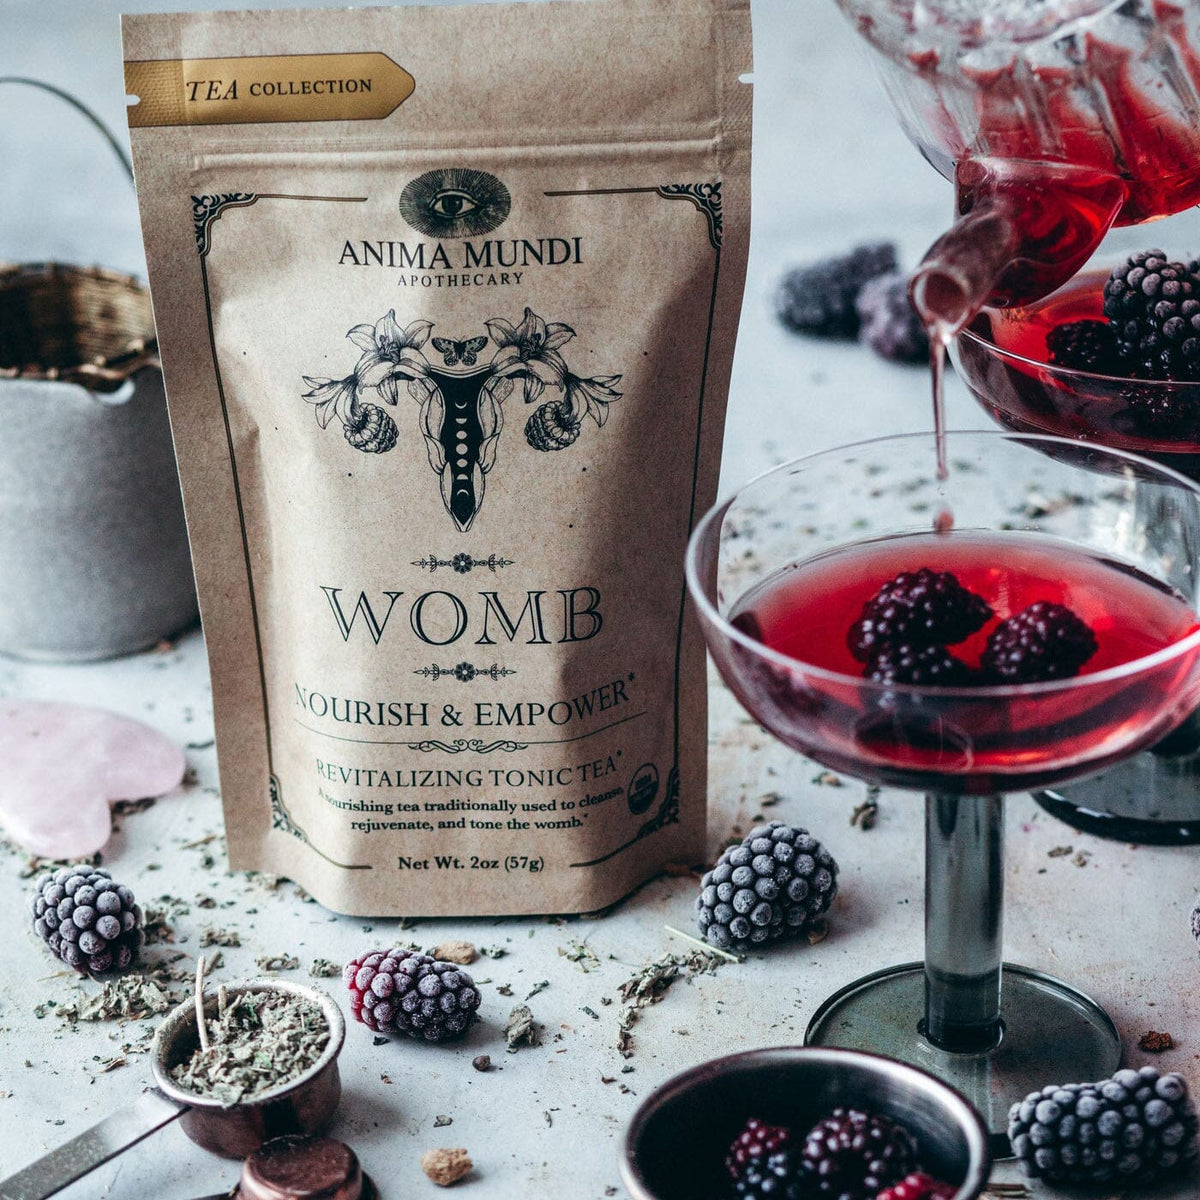 WOMB Tea | Nourish + Empower Tee Anima Mundi Apothecary - Genuine Selection